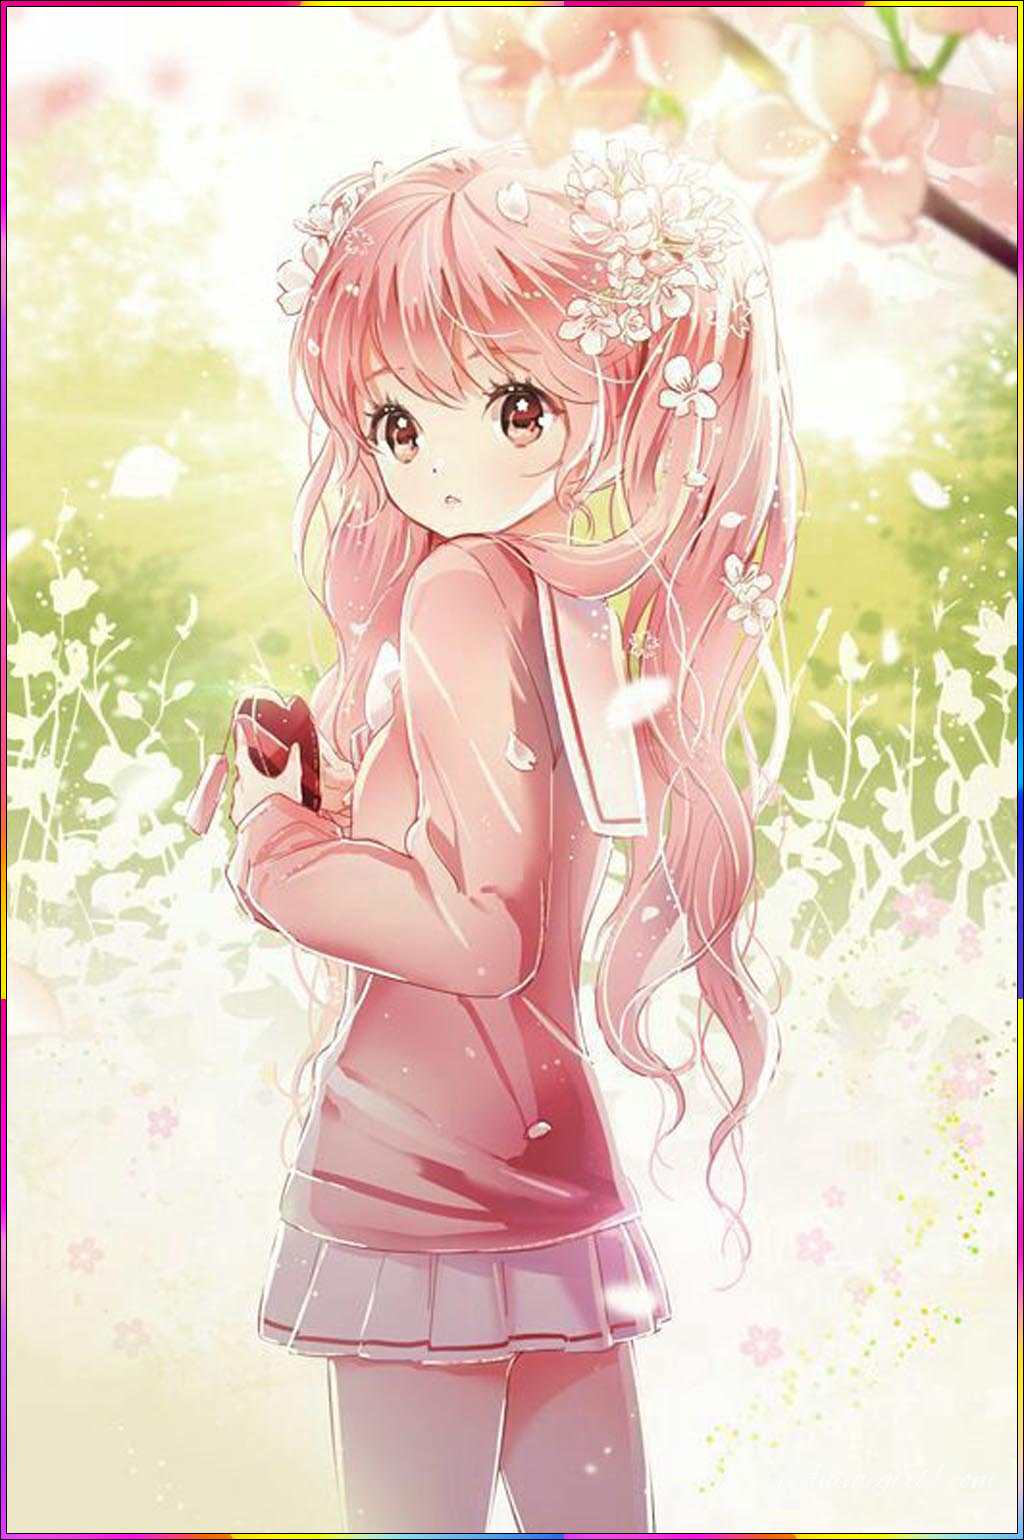 pretty anime girl in pink dress